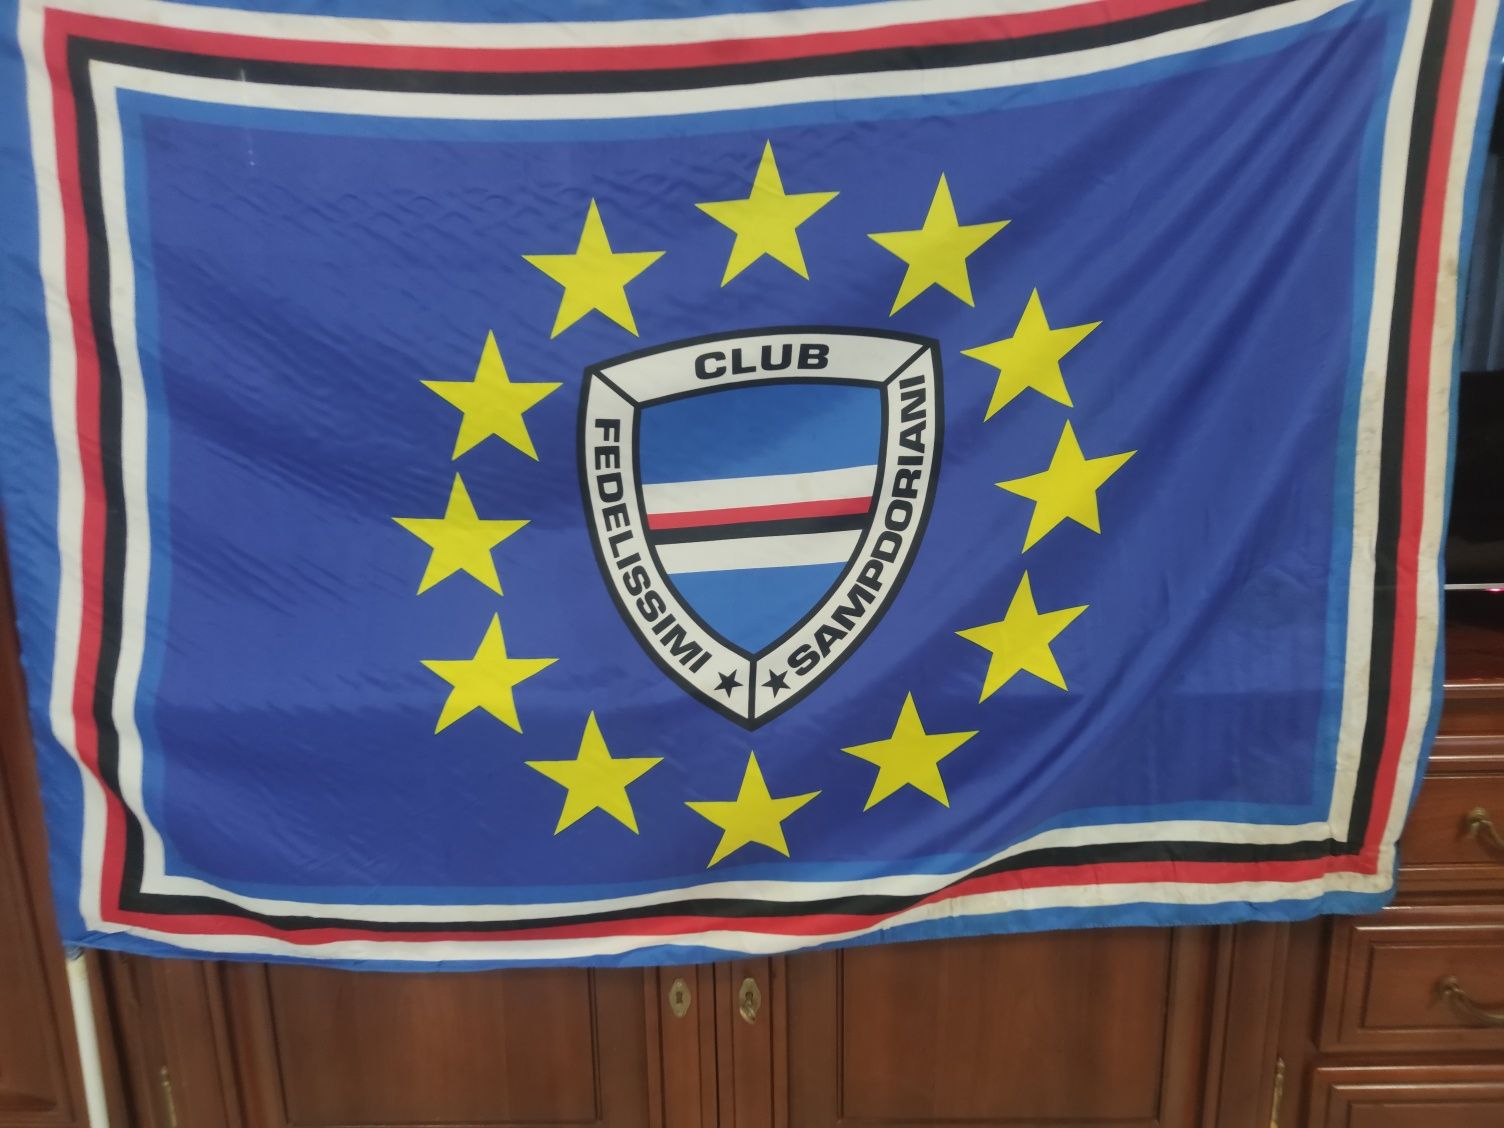 Bandeira club Fedelissimi sampdoriani